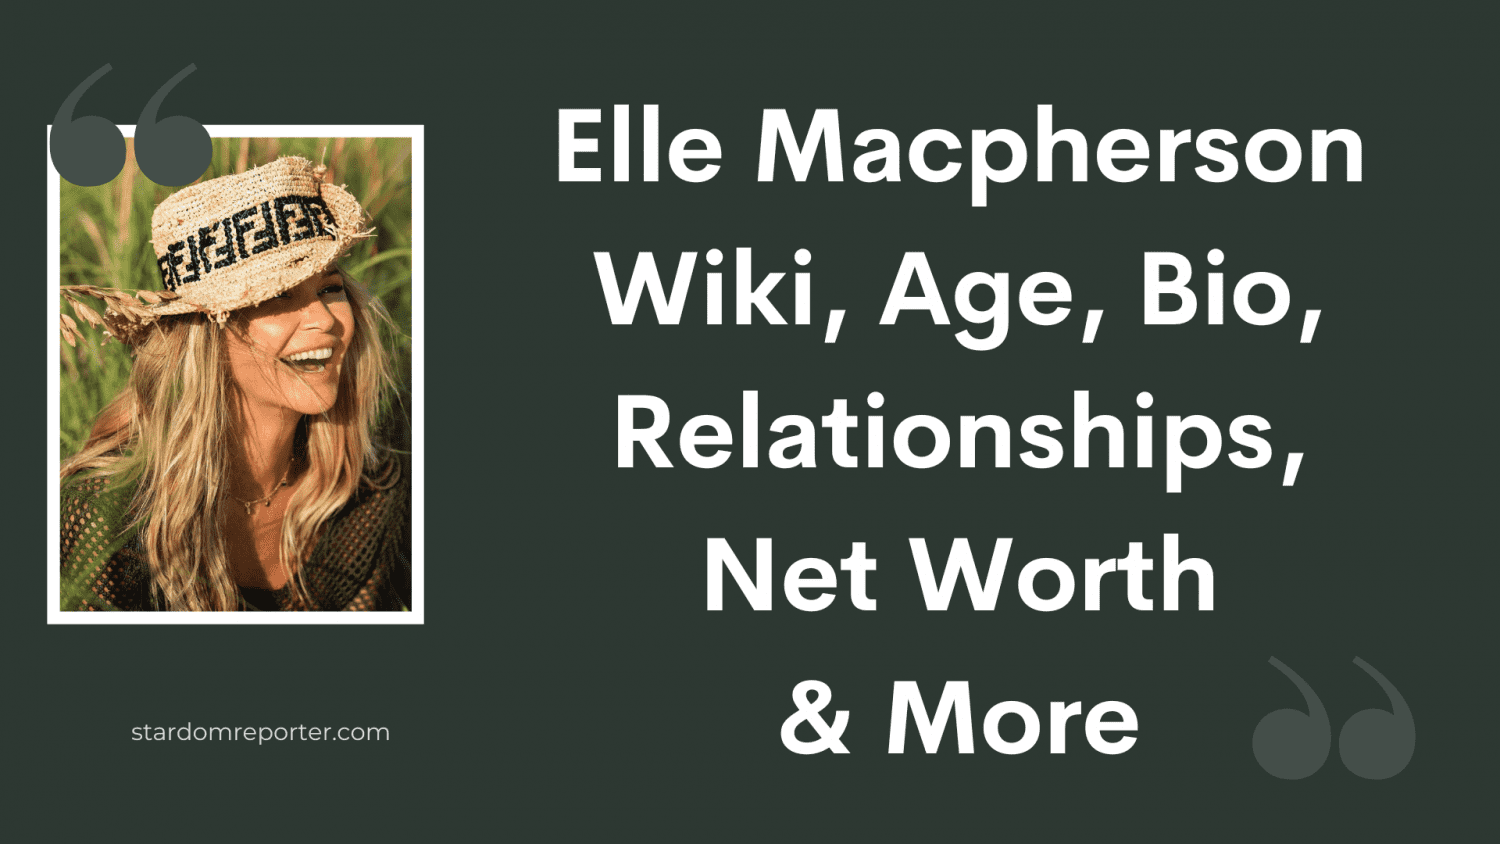 Elle Macpherson Wiki, Age, Bio, Relationships, Net Worth & More - 25